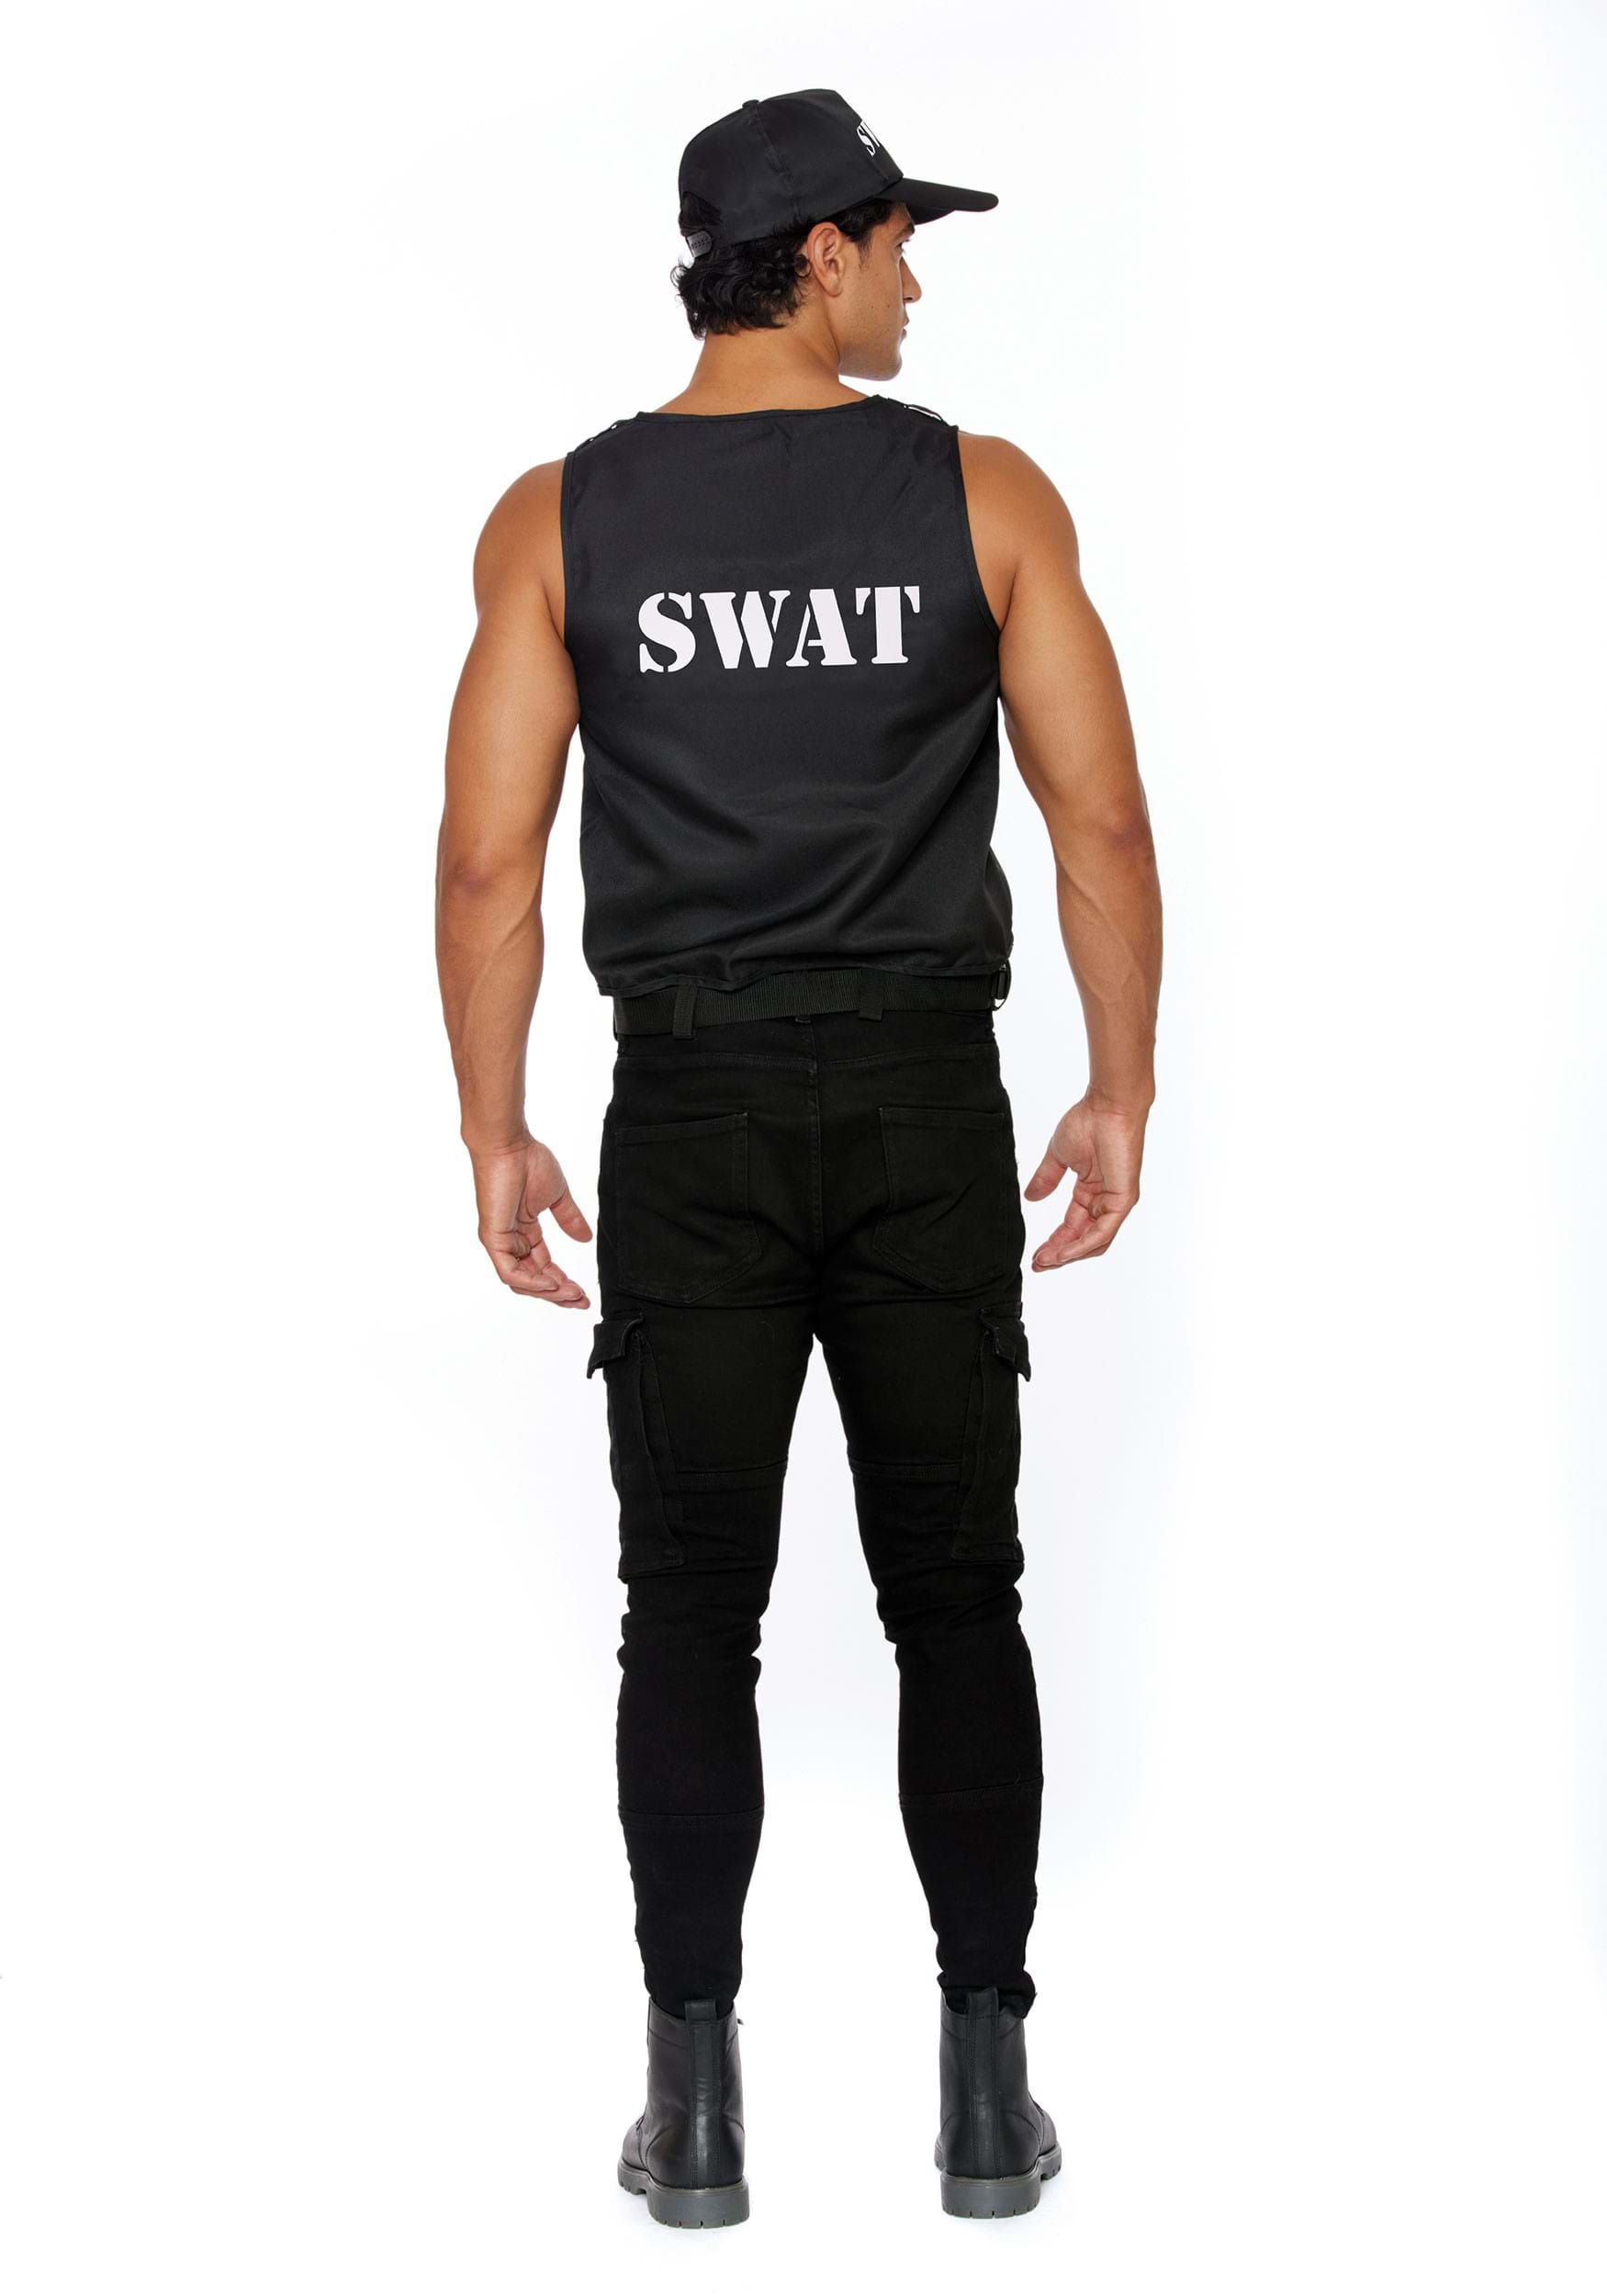 Men's Sexy S.W.A.T. Team Costume